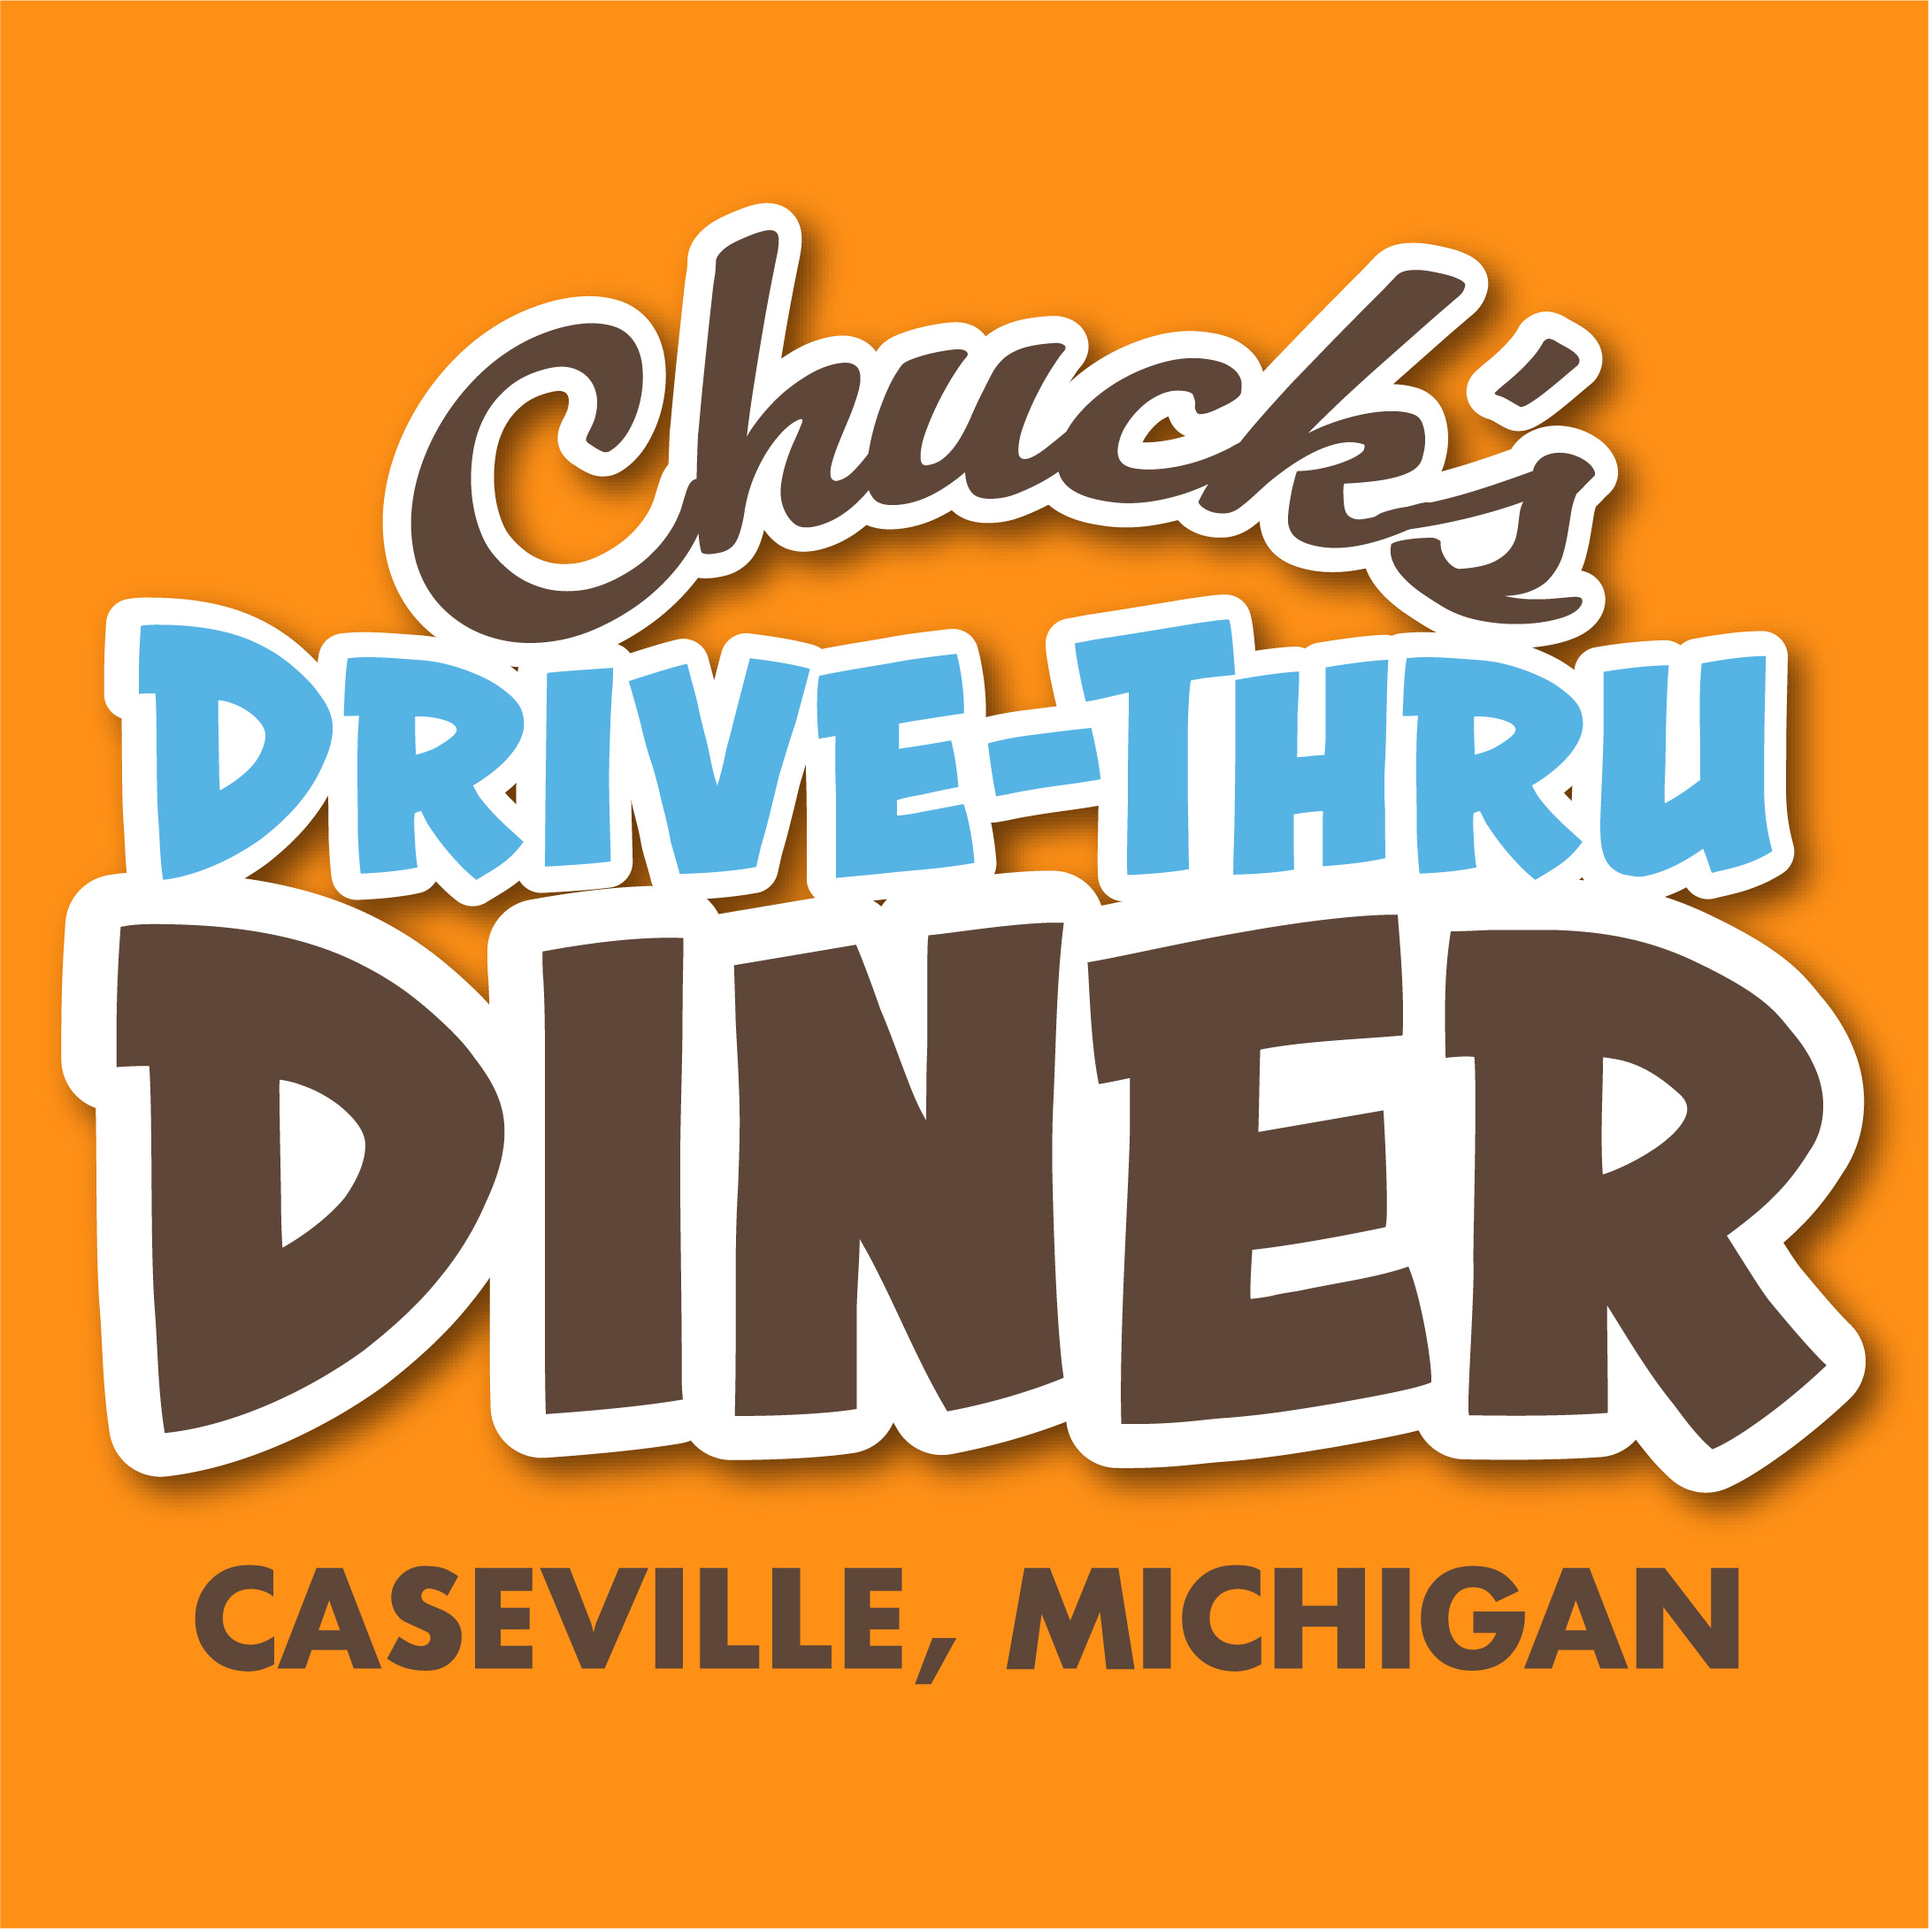 Chuck's Drive